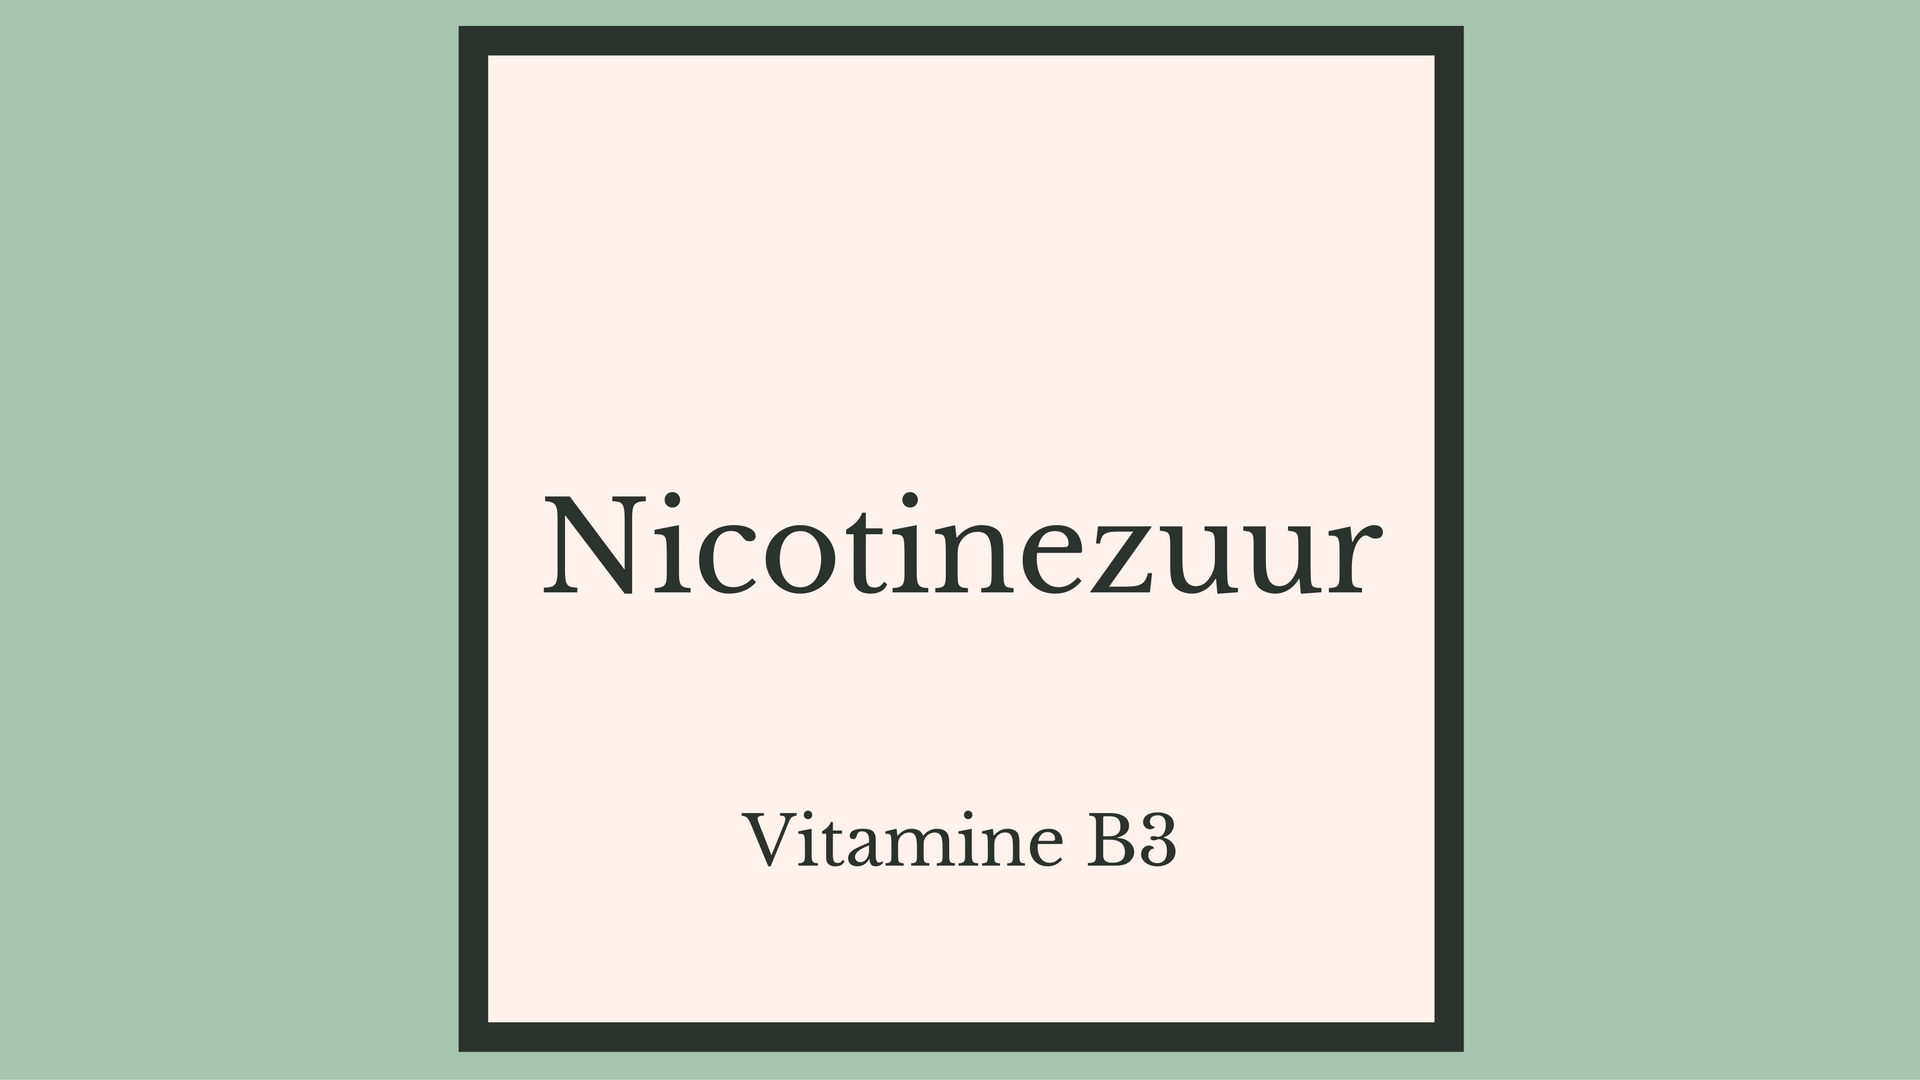 Vitamine B3